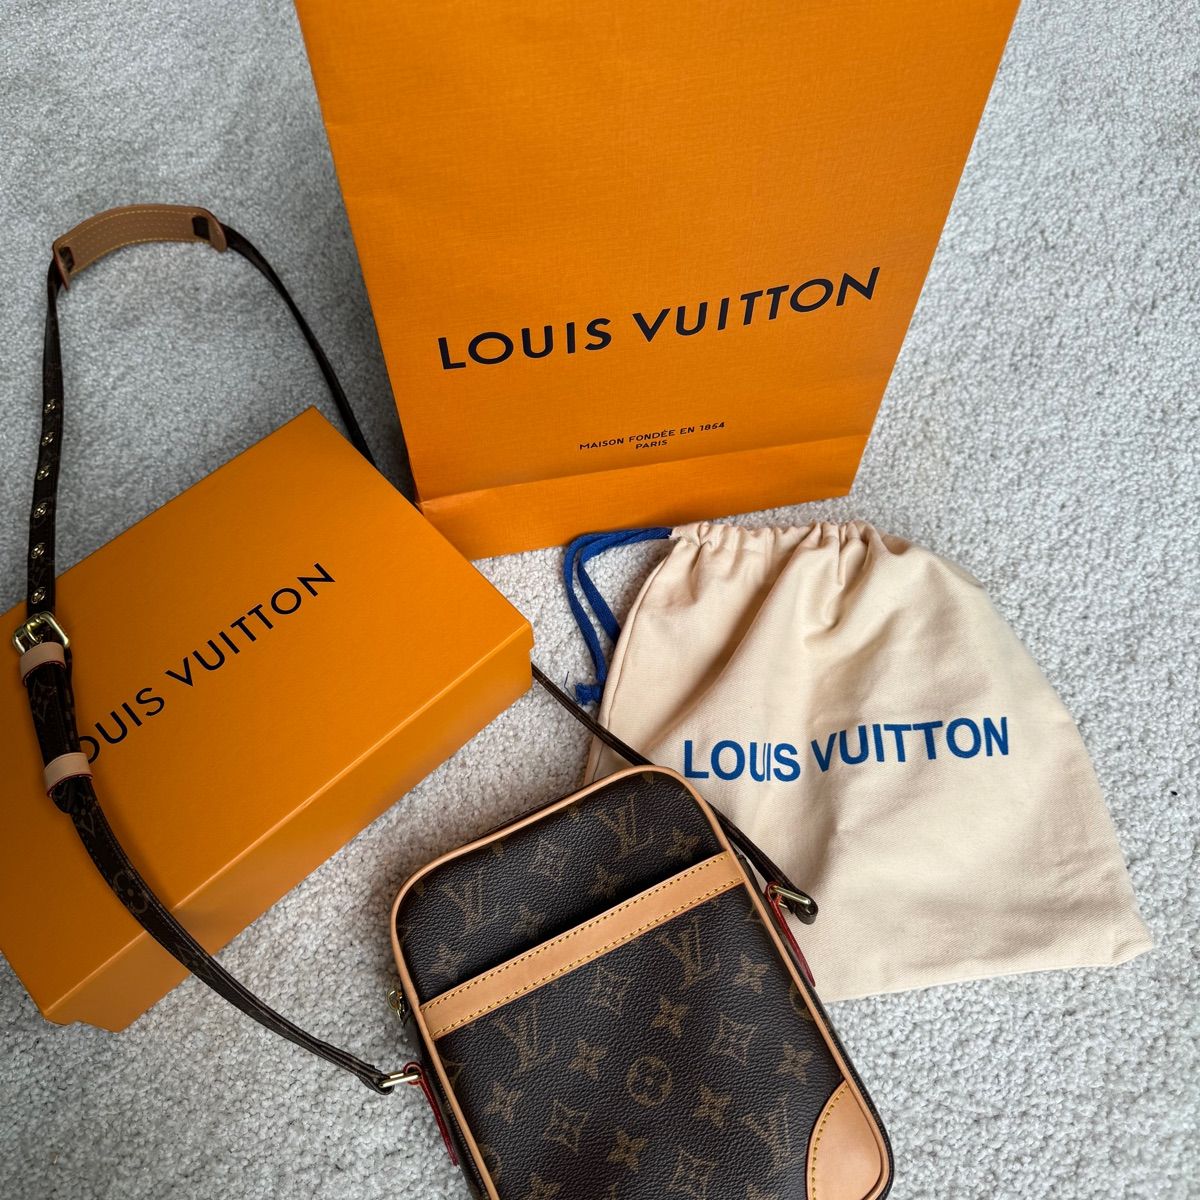 Bolsa Louis Vuitton original Speedy Yayoi Kusama amarela feminina